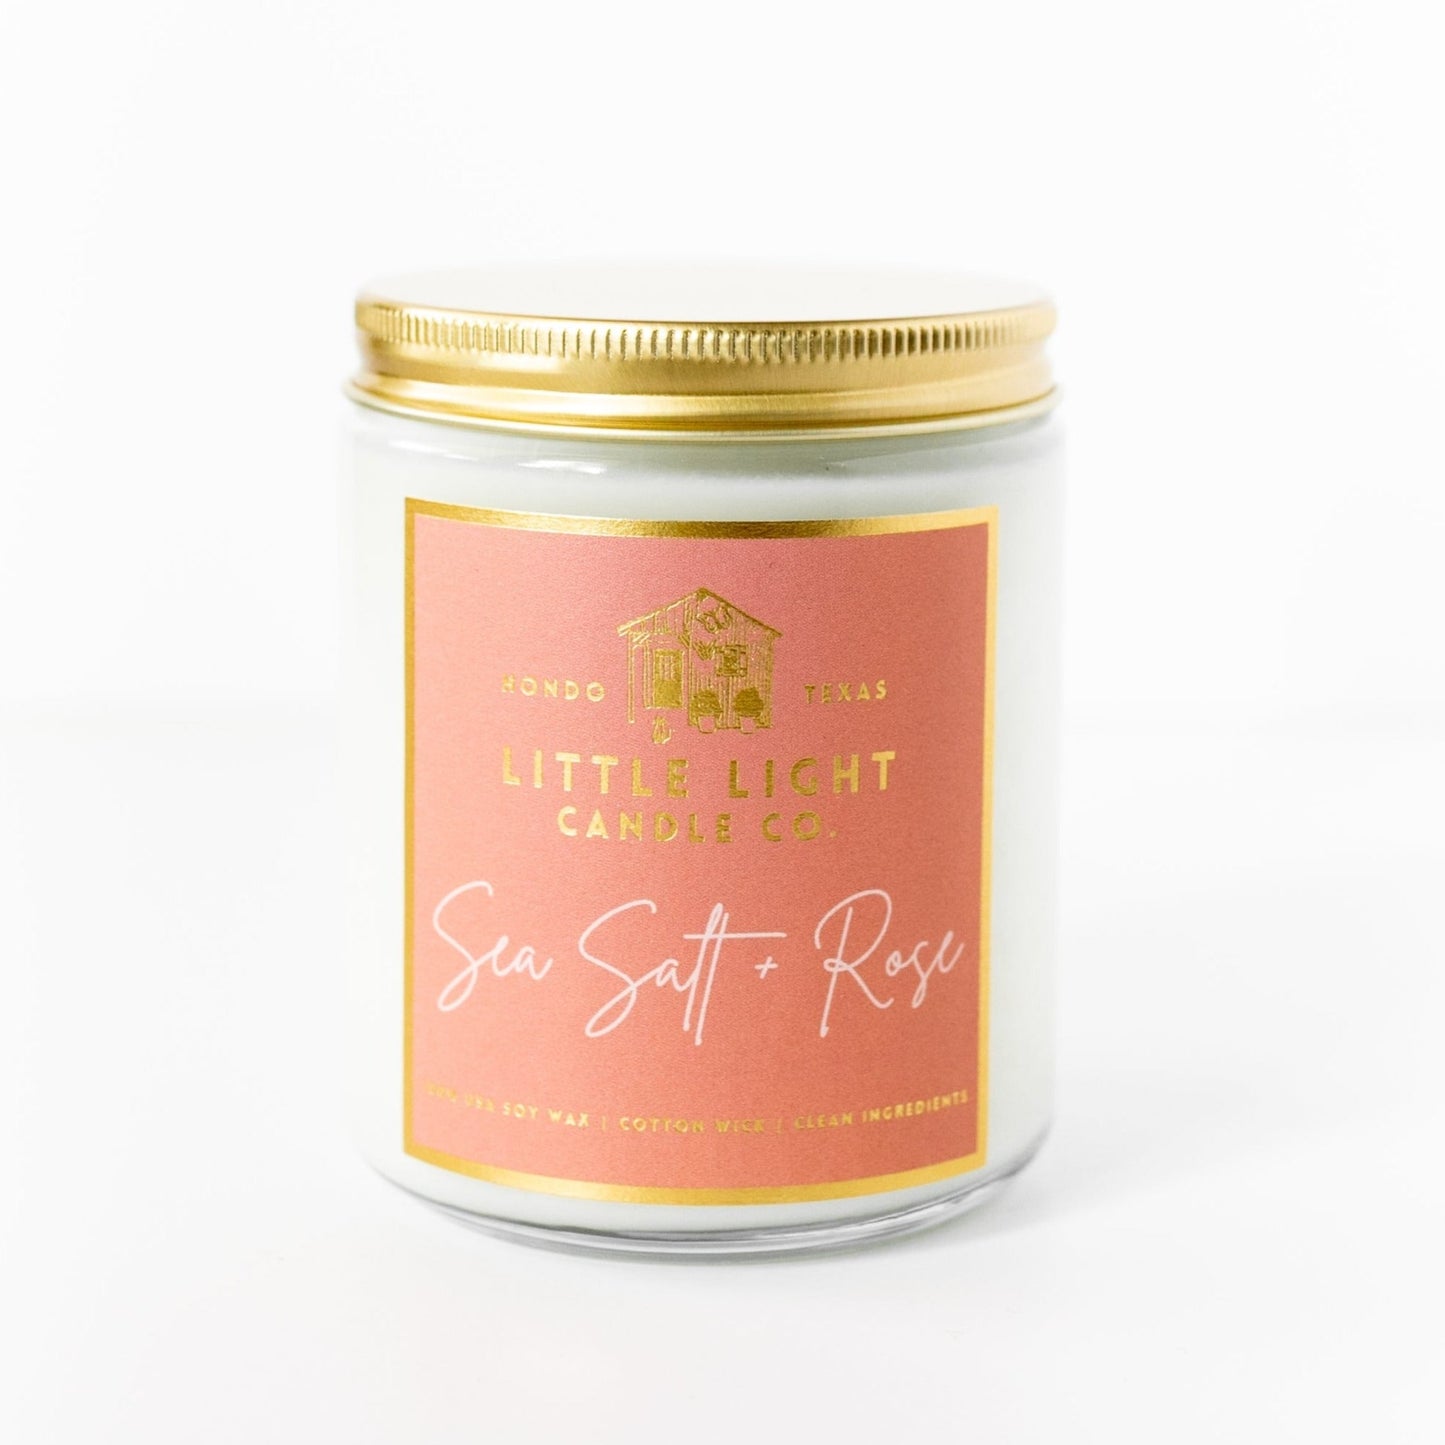 Sea Salt & Rose Jar